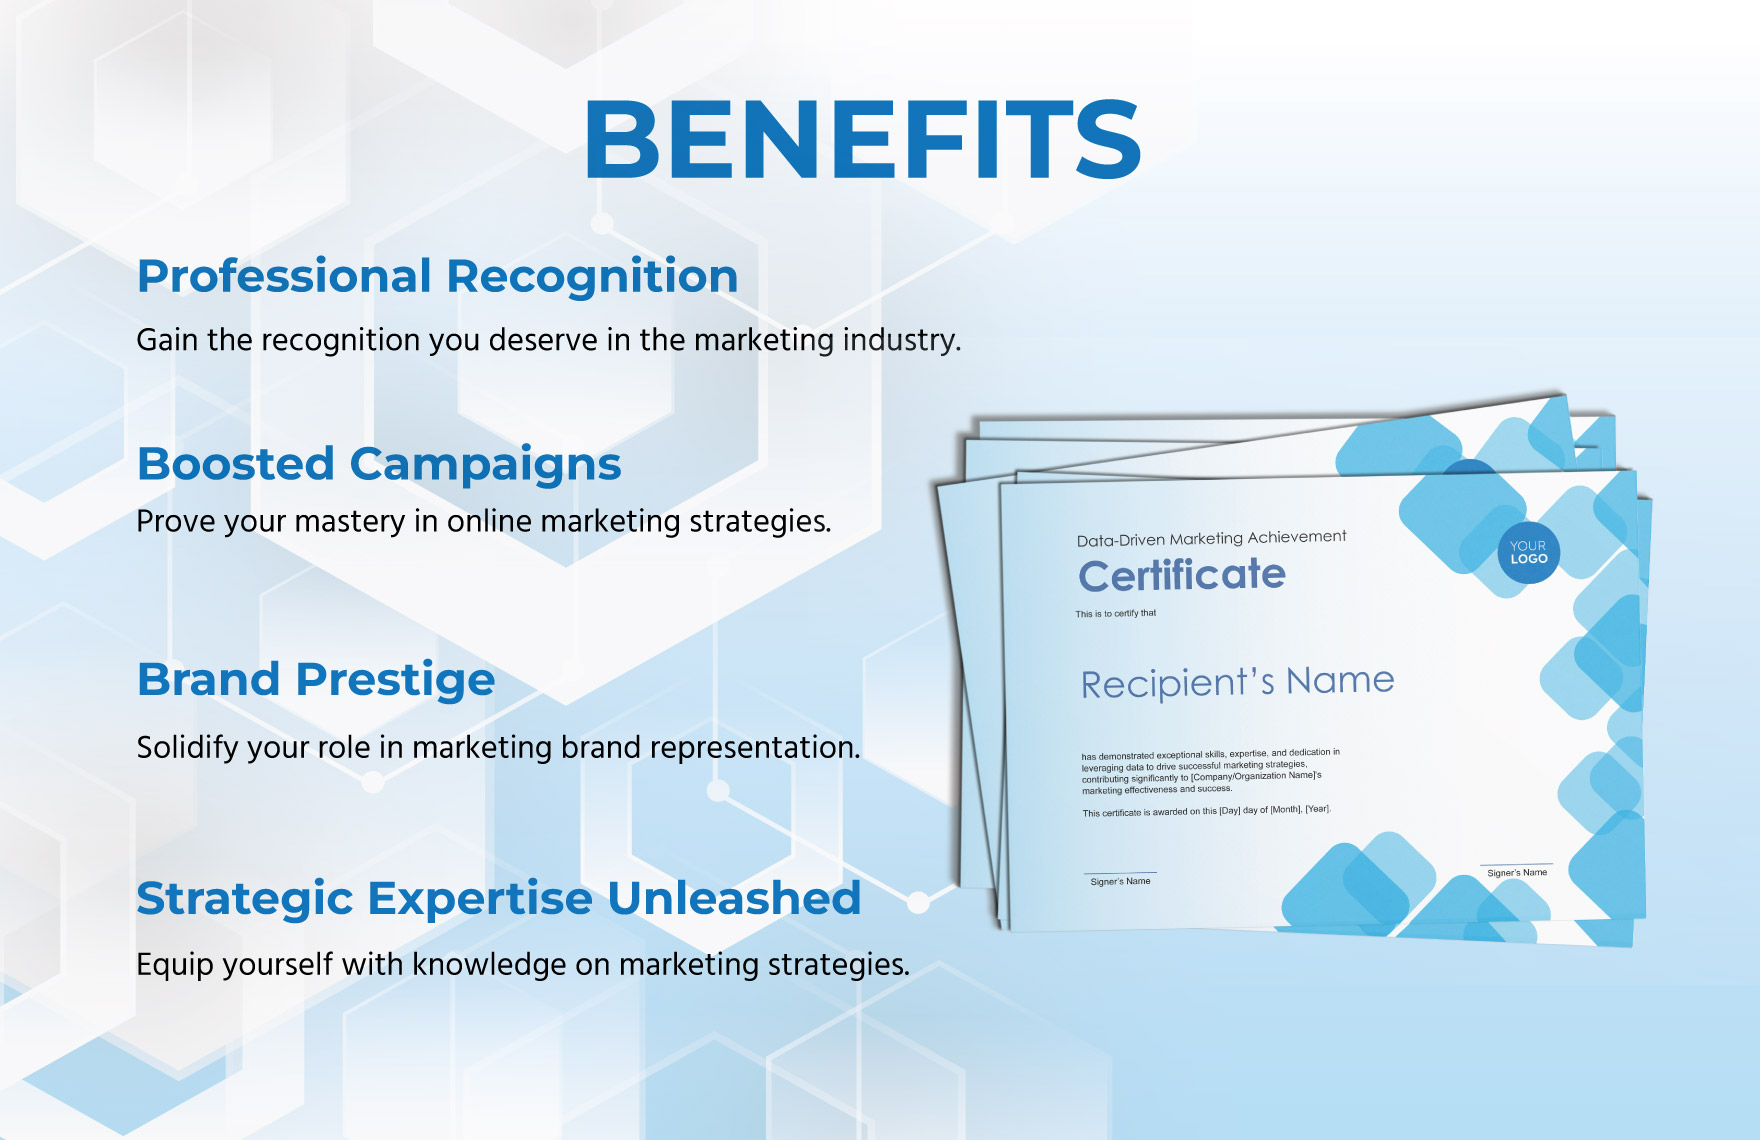 Data-Driven Marketing Achievement Certificate Template